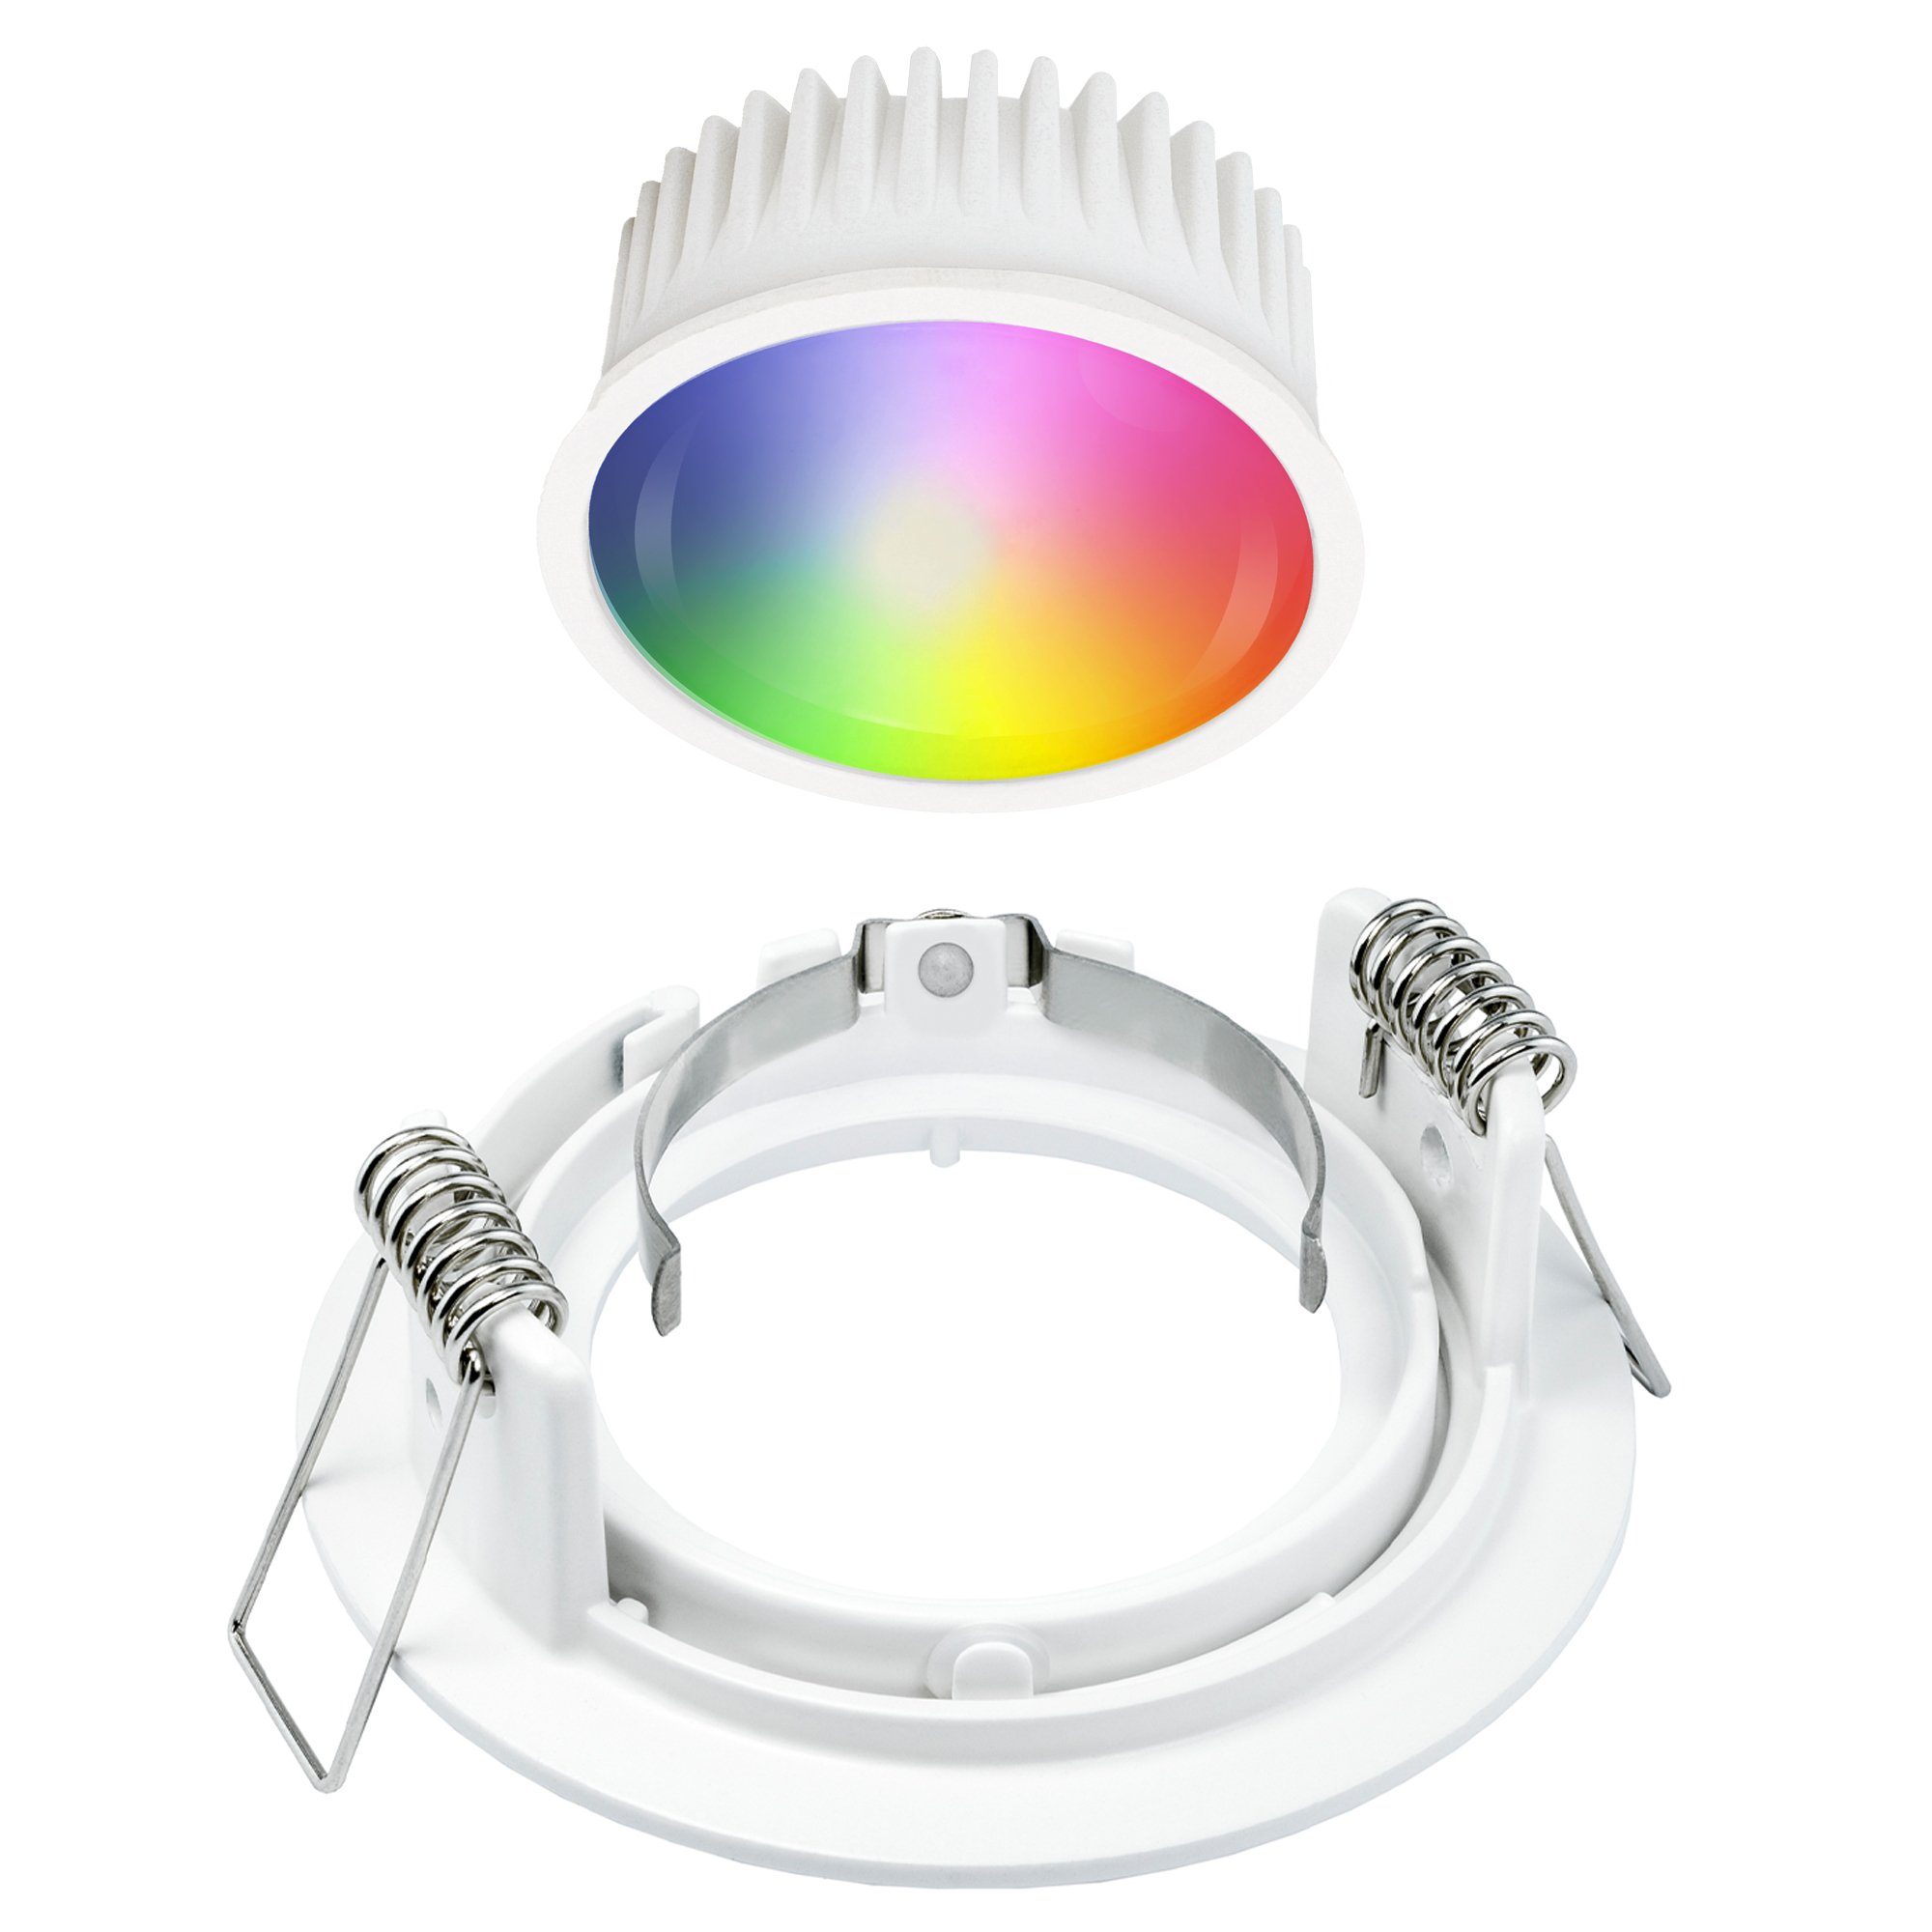 linovum LED Einbaustrahler Extra Smart weiss inkl. flacher Einbaustrahler inklusive inklusive, Leuchtmittel GU10, rund WLAN LED Leuchtmittel